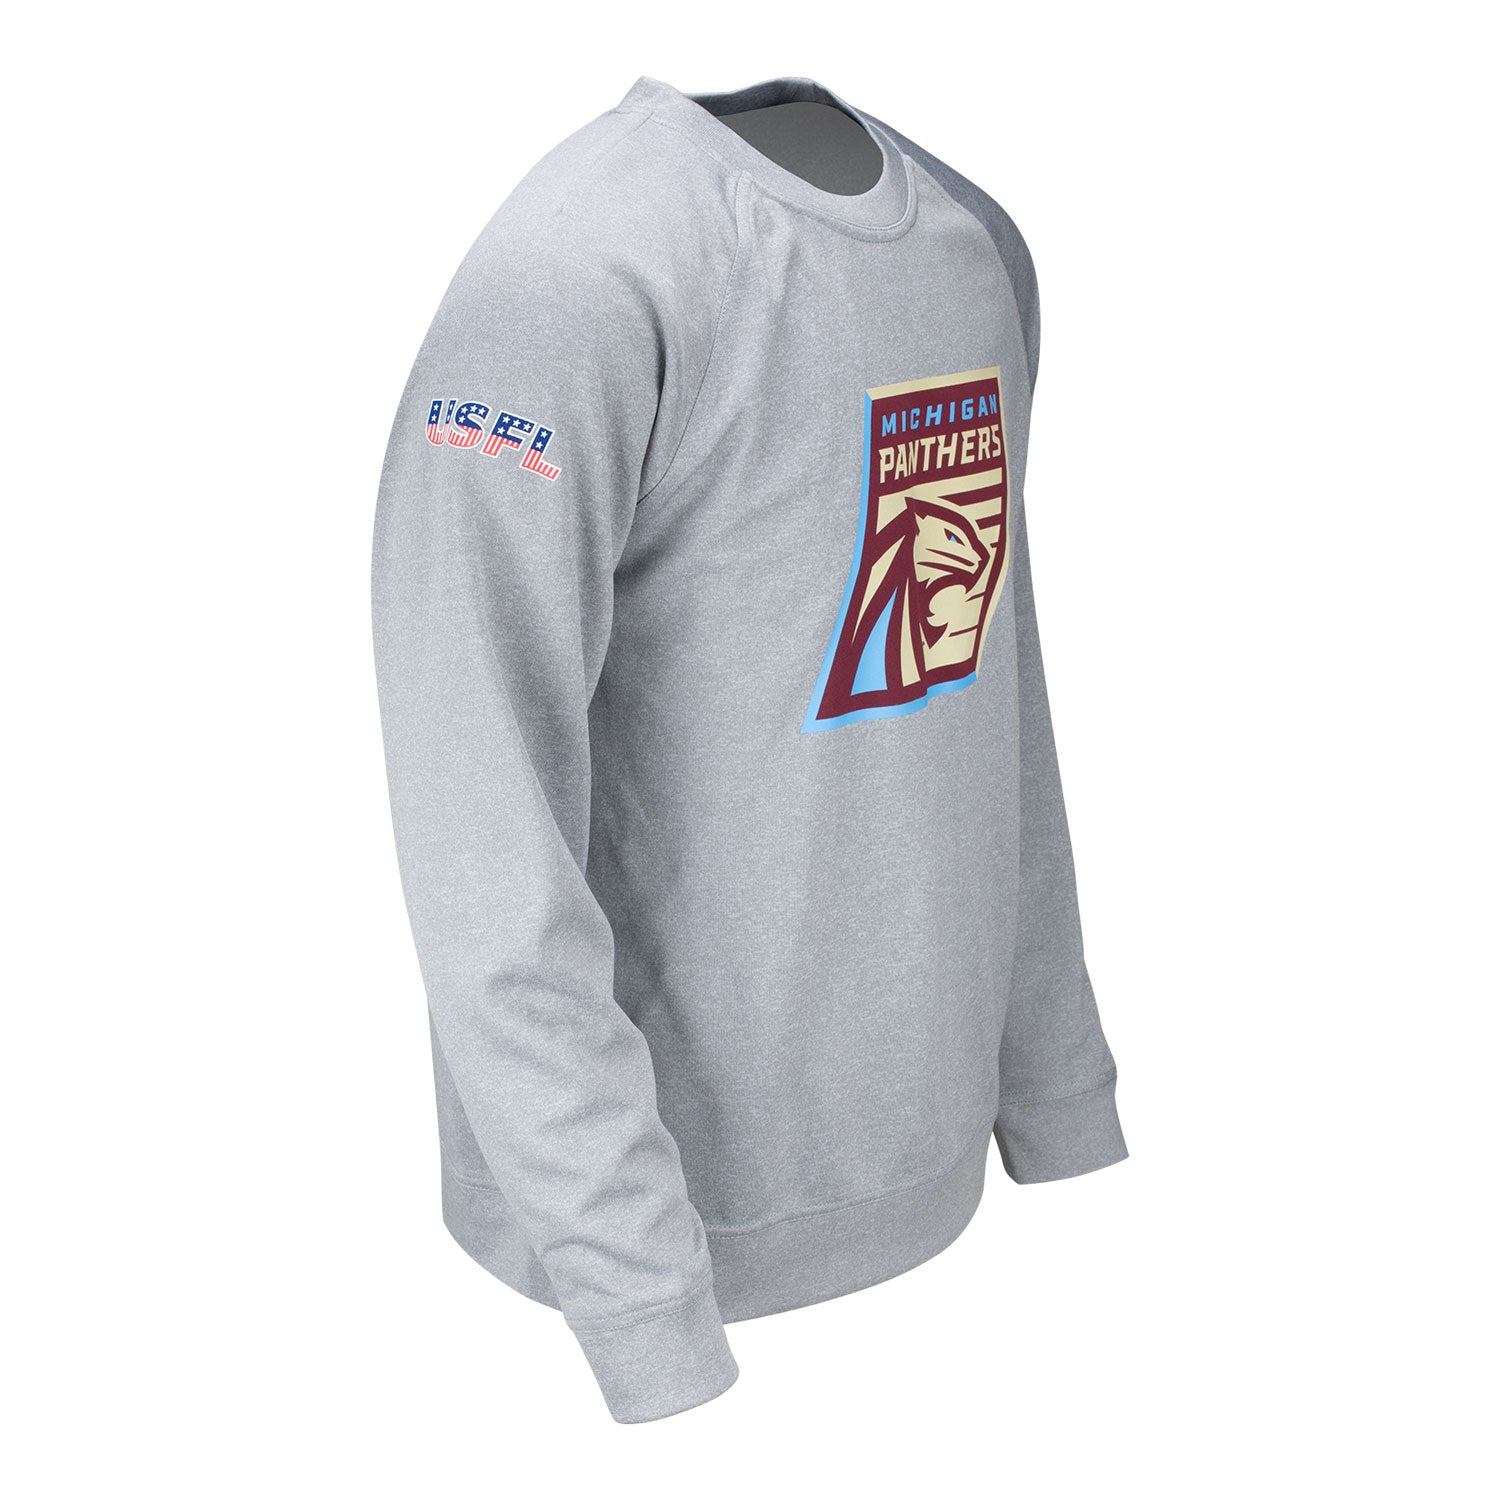 Michigan Panthers Crewneck Sweatshirt In Grey - Side View